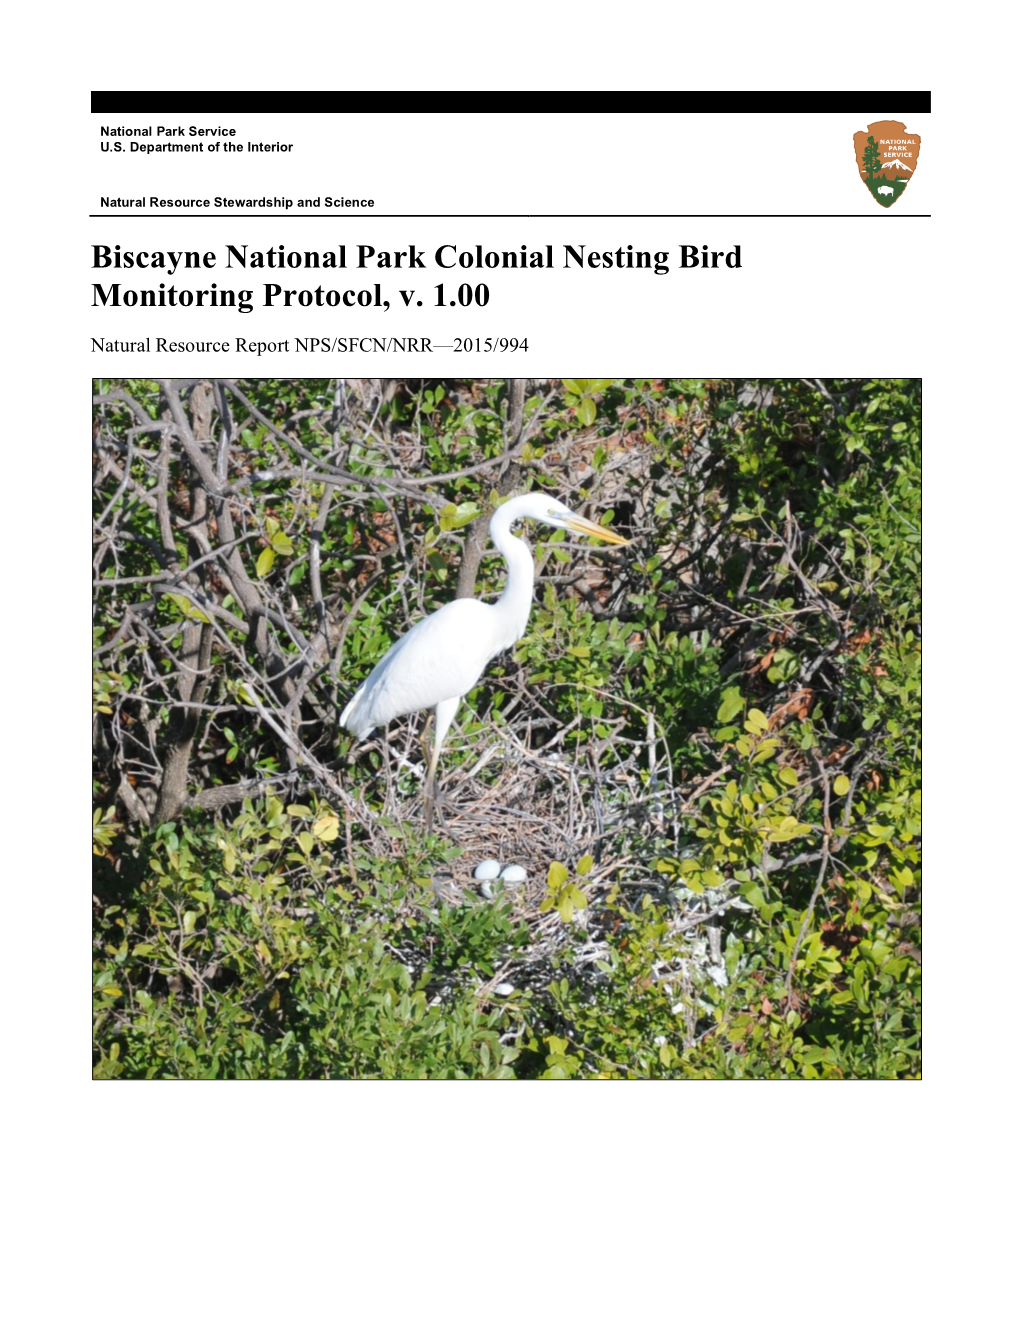 Biscayne National Park Colonial Nesting Bird Monitoring Protocol, V